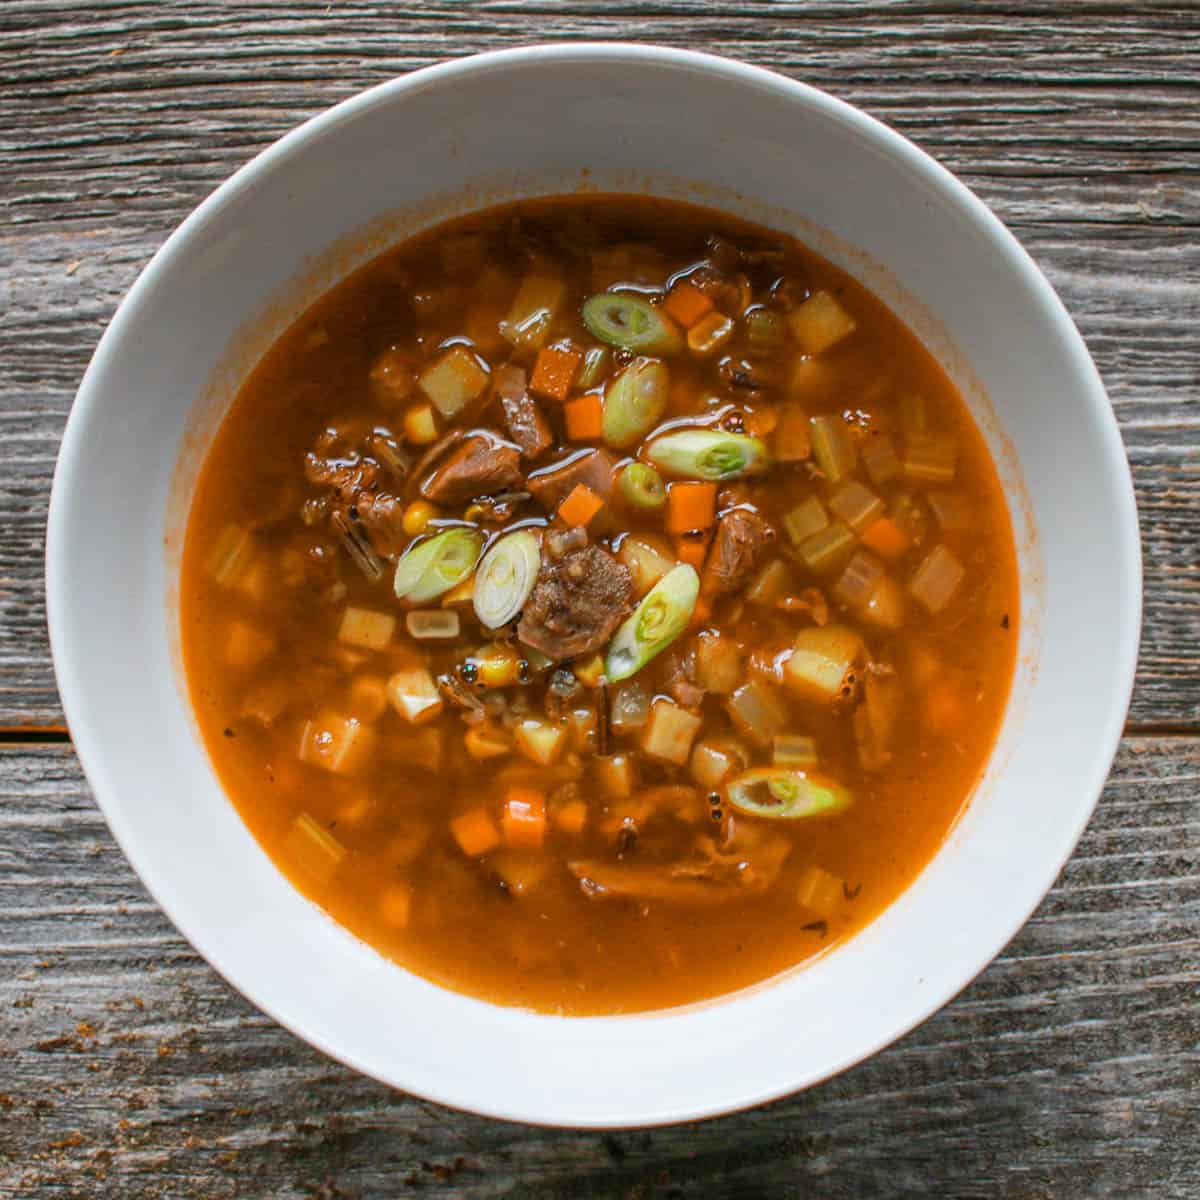 Woodchuck or groundhog stew recipe